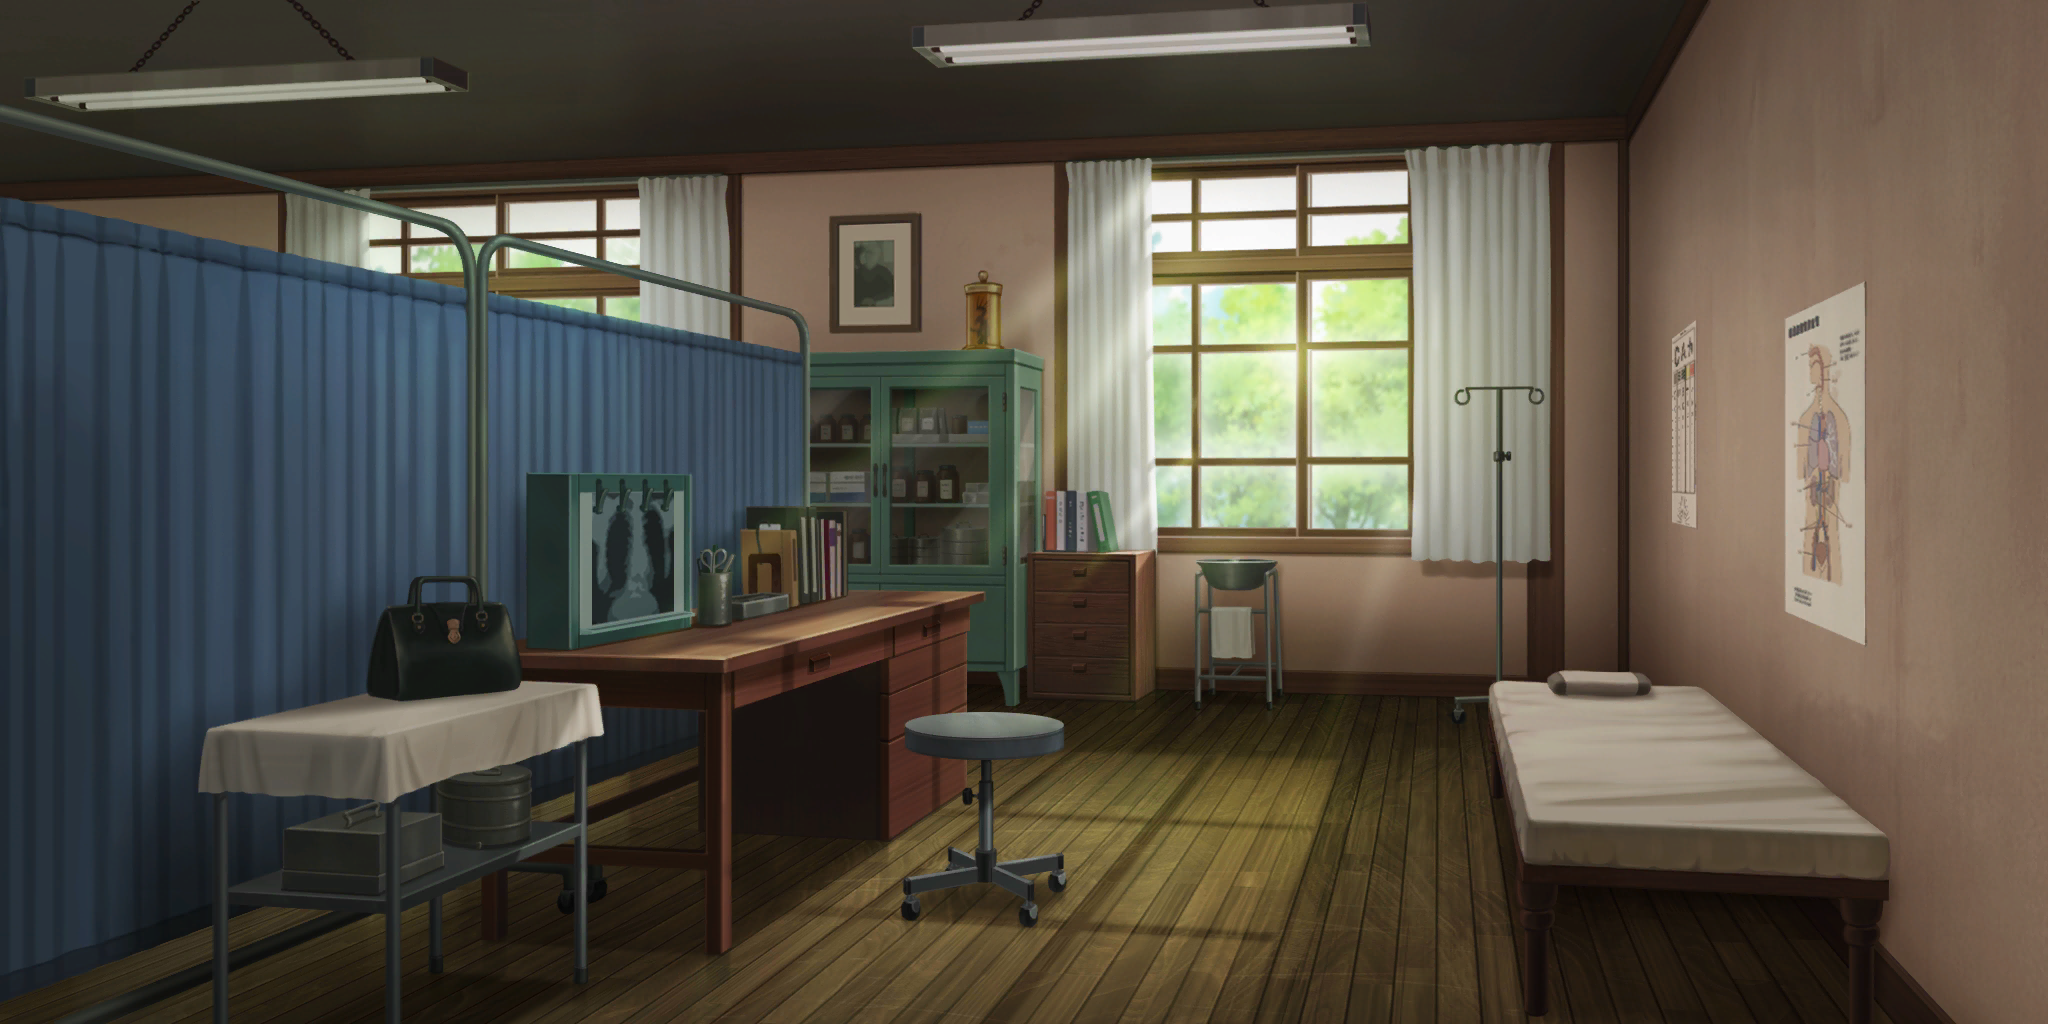 Touhou LostWord - Hakurei School Nurse's Office